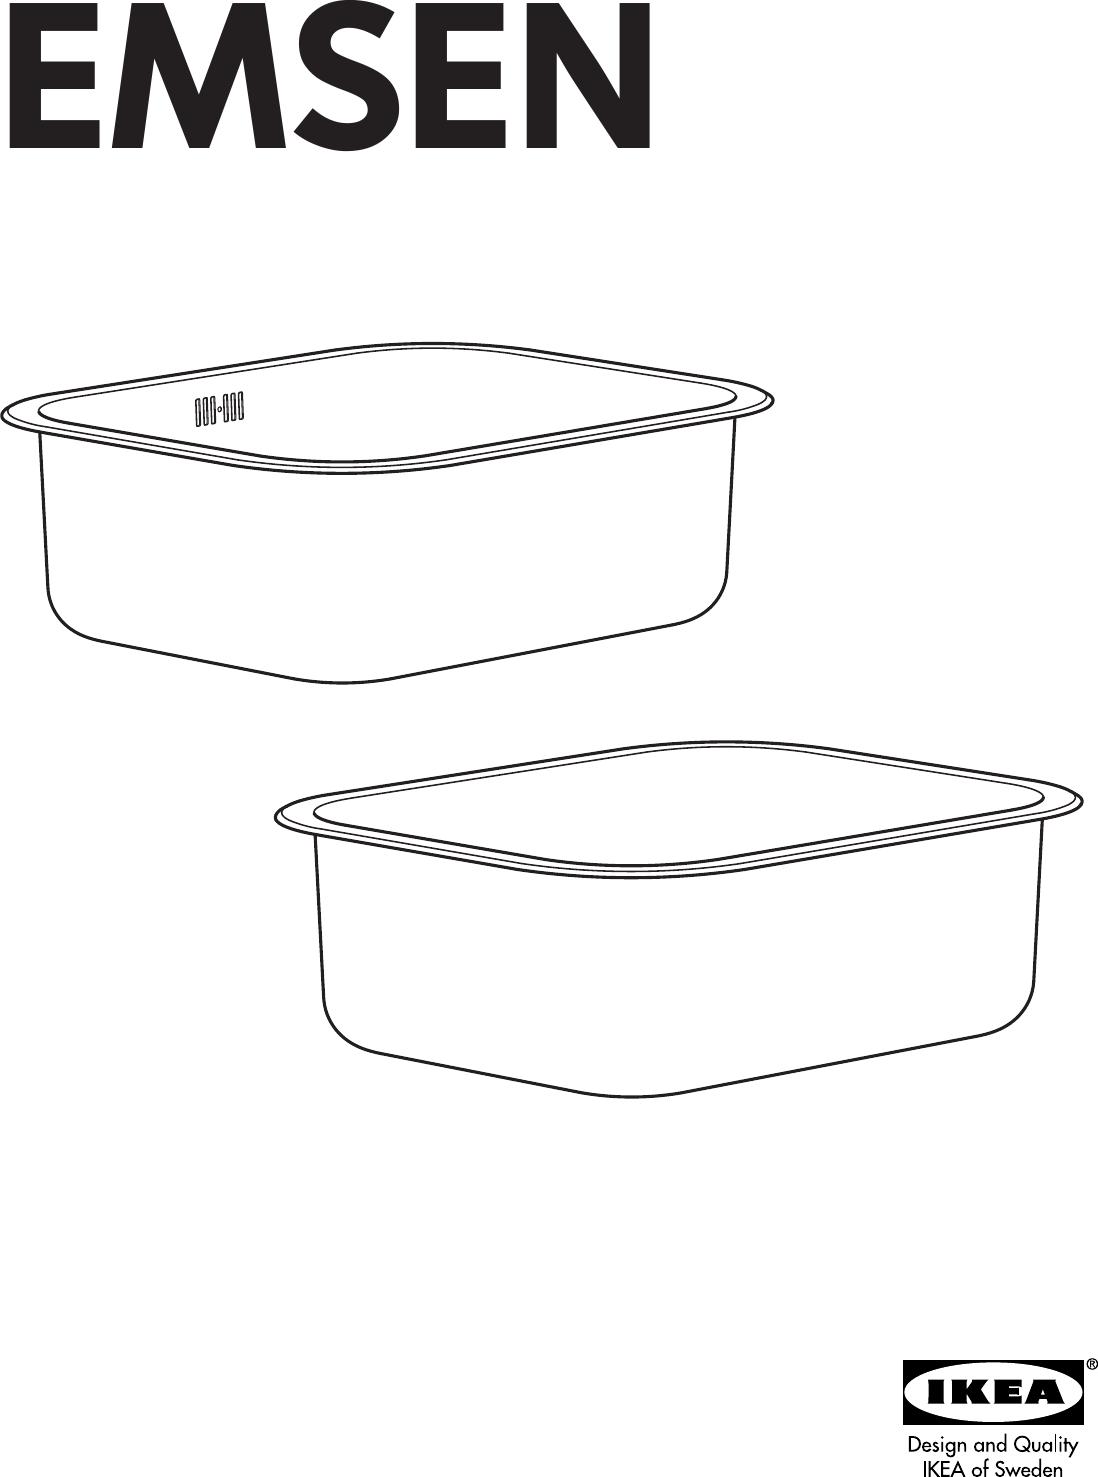 Page 1 of 8 - Ikea Ikea-Emsen-Single-Bowl-Inset-Sink-22X18-Assembly-Instruction